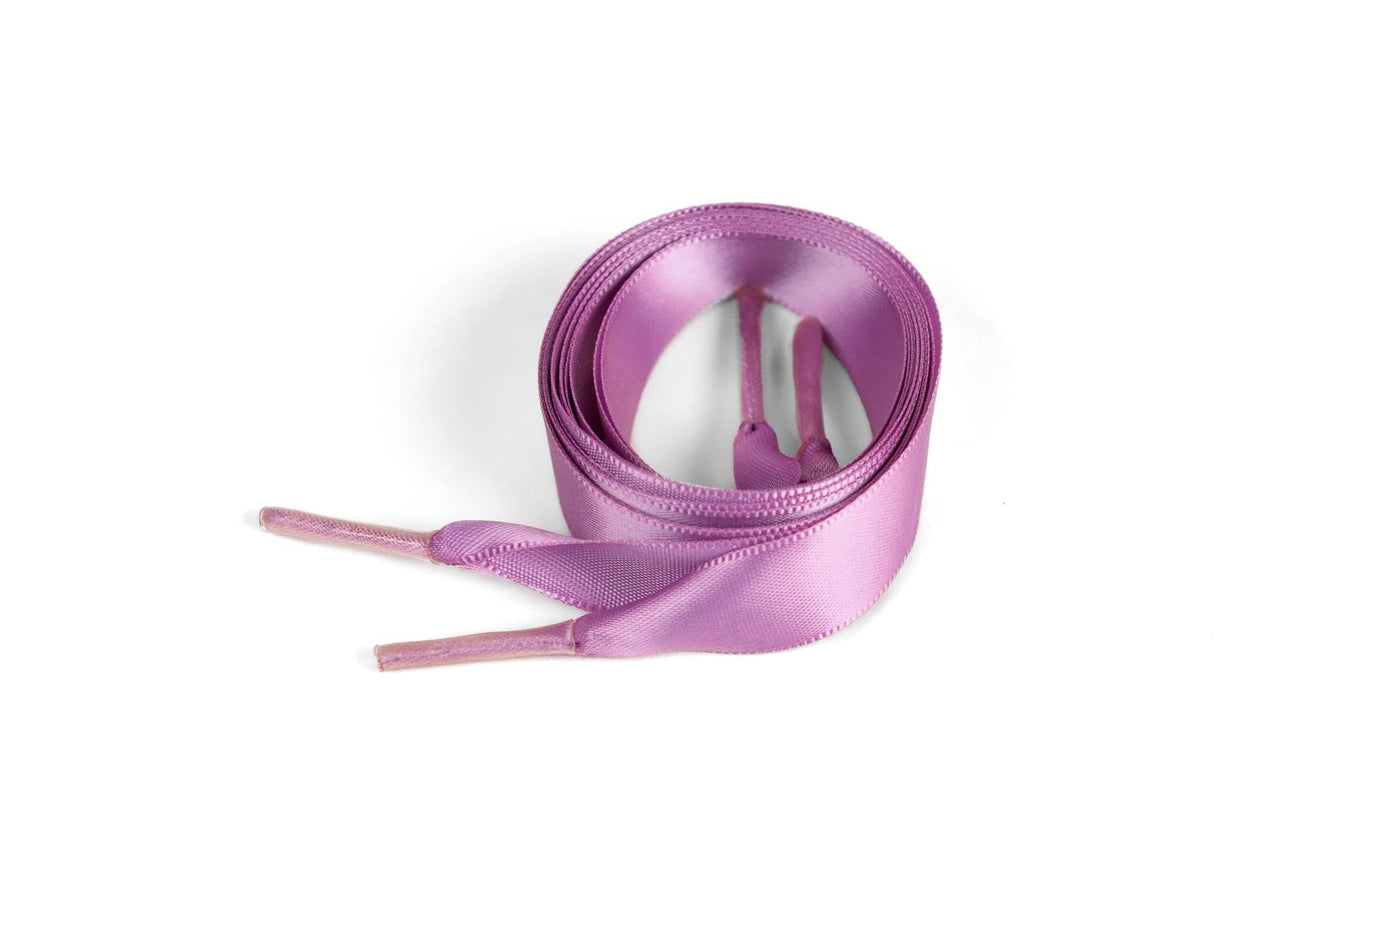 Satin Ribbon 5/8" Premium Quality Shoelaces - 48" Inch Length Rosie Mauve